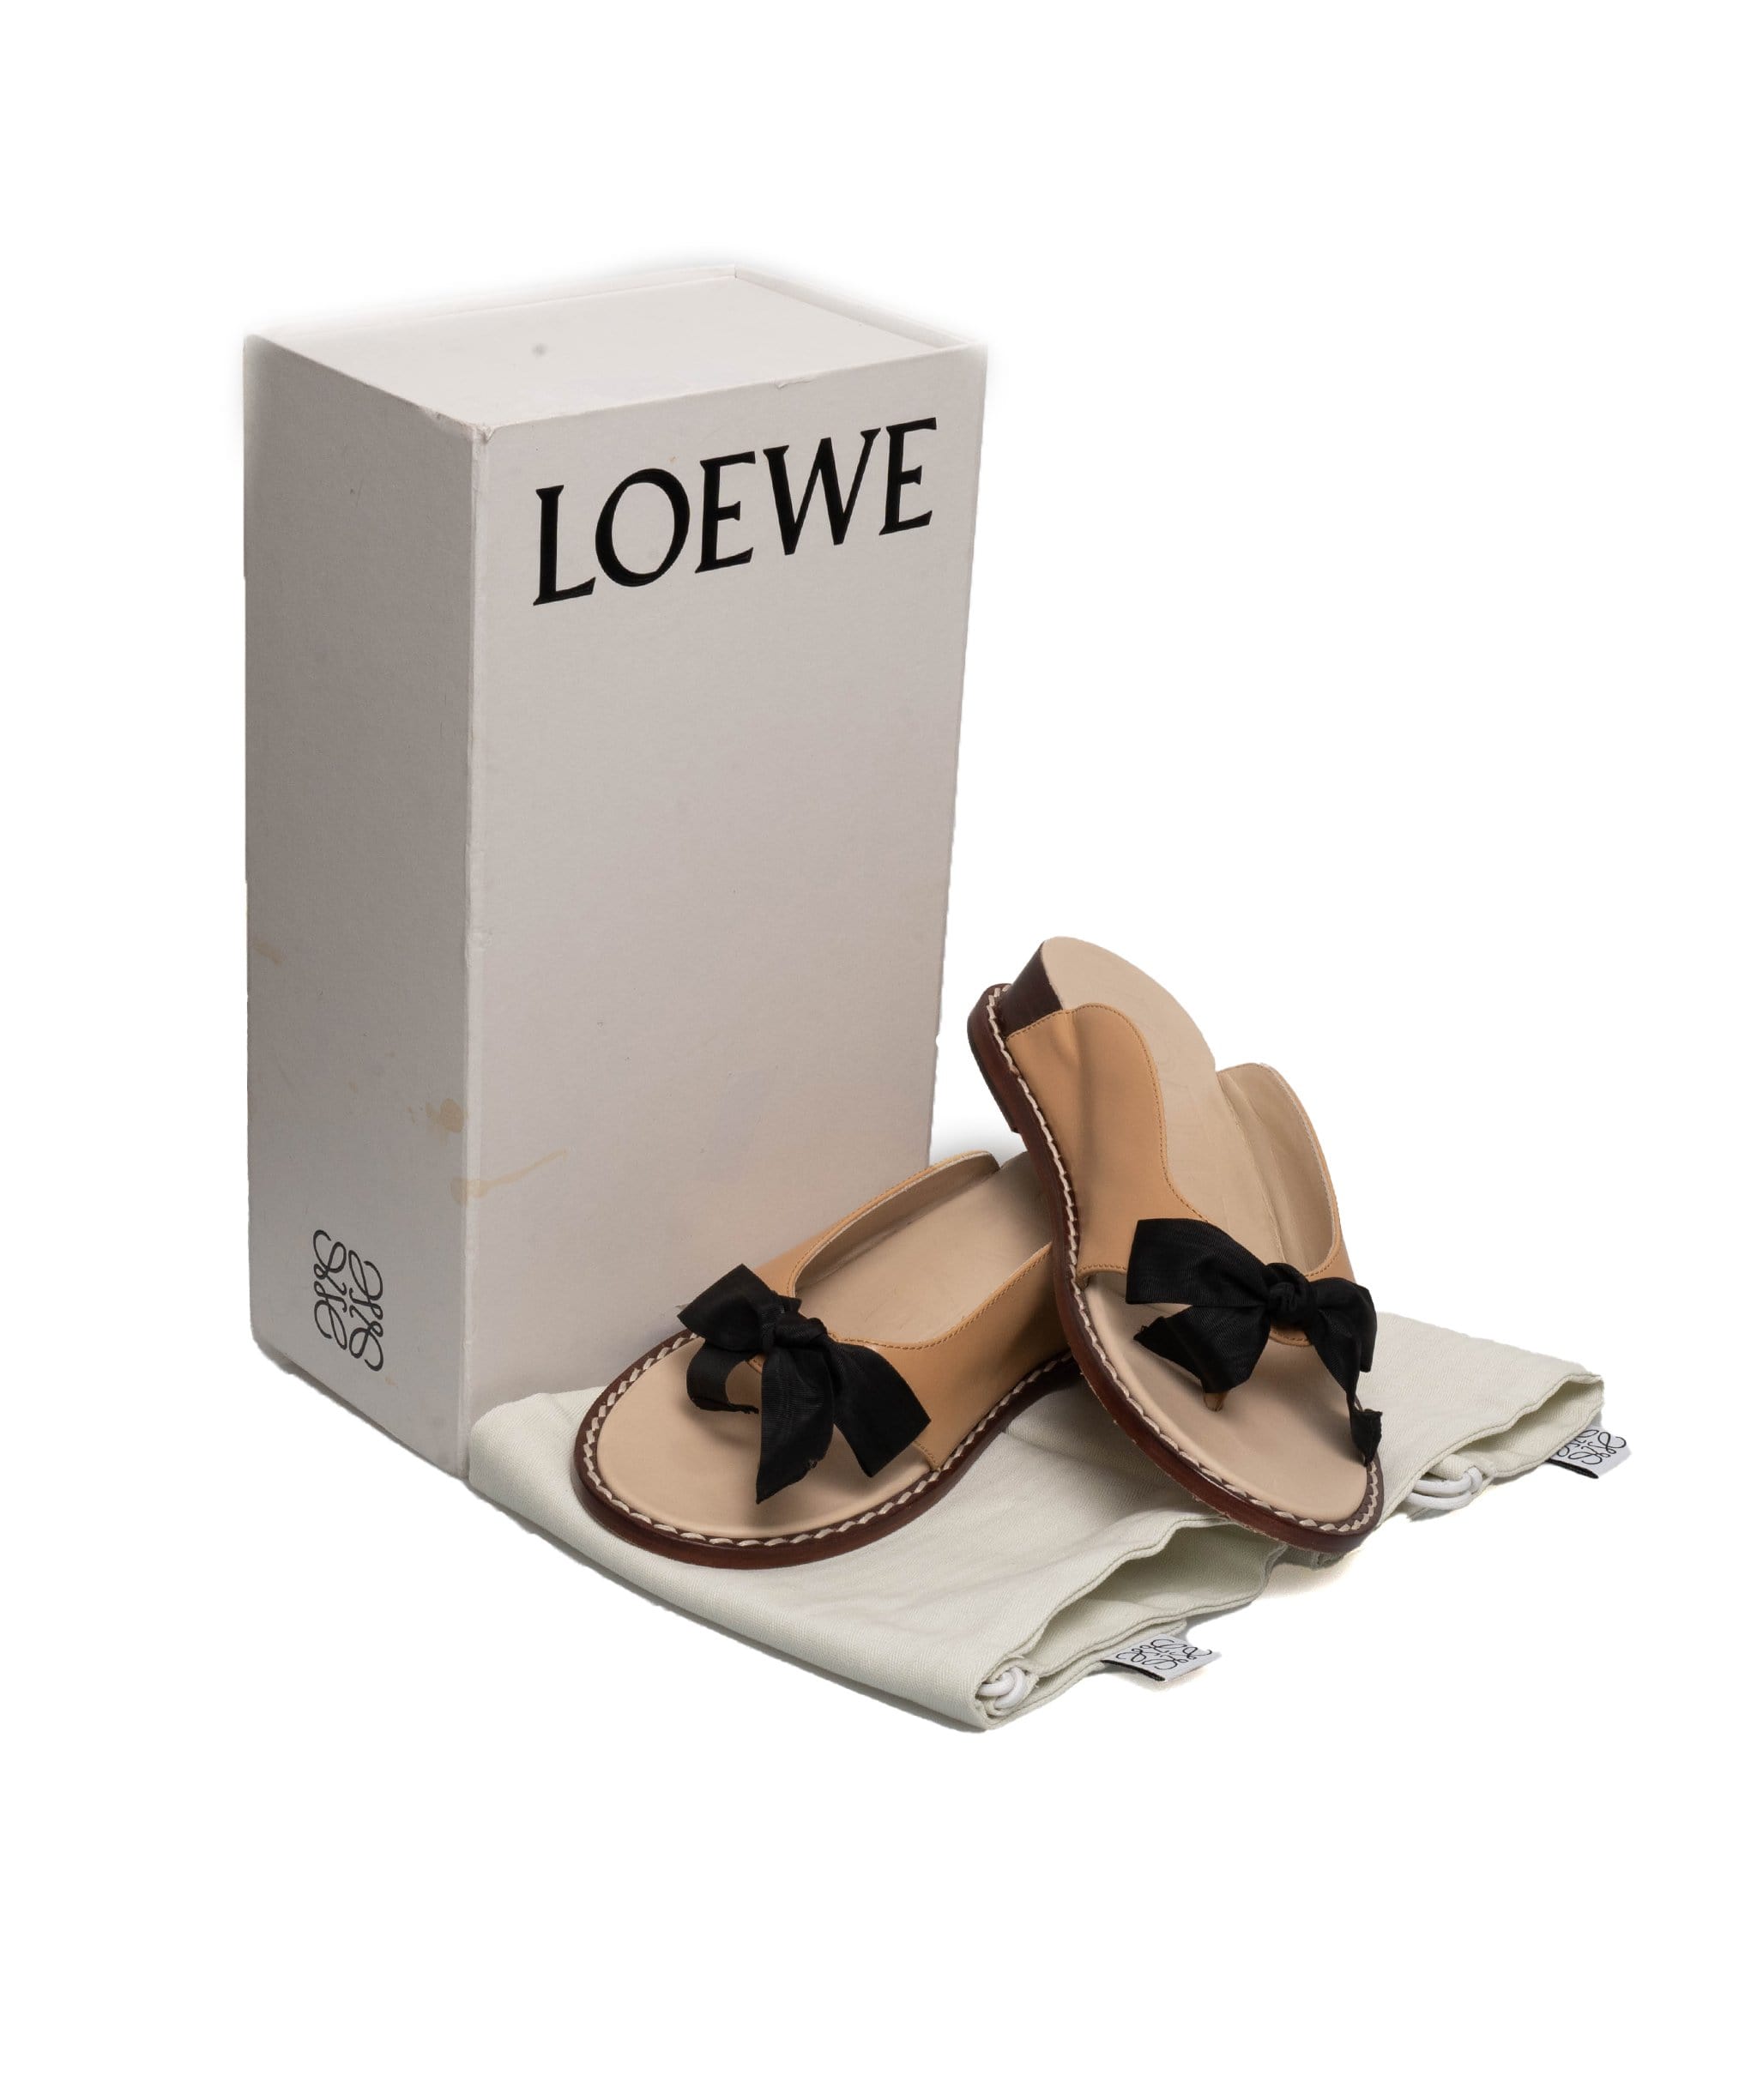 Loewe Loewe shoes with bow detail - AWC1053